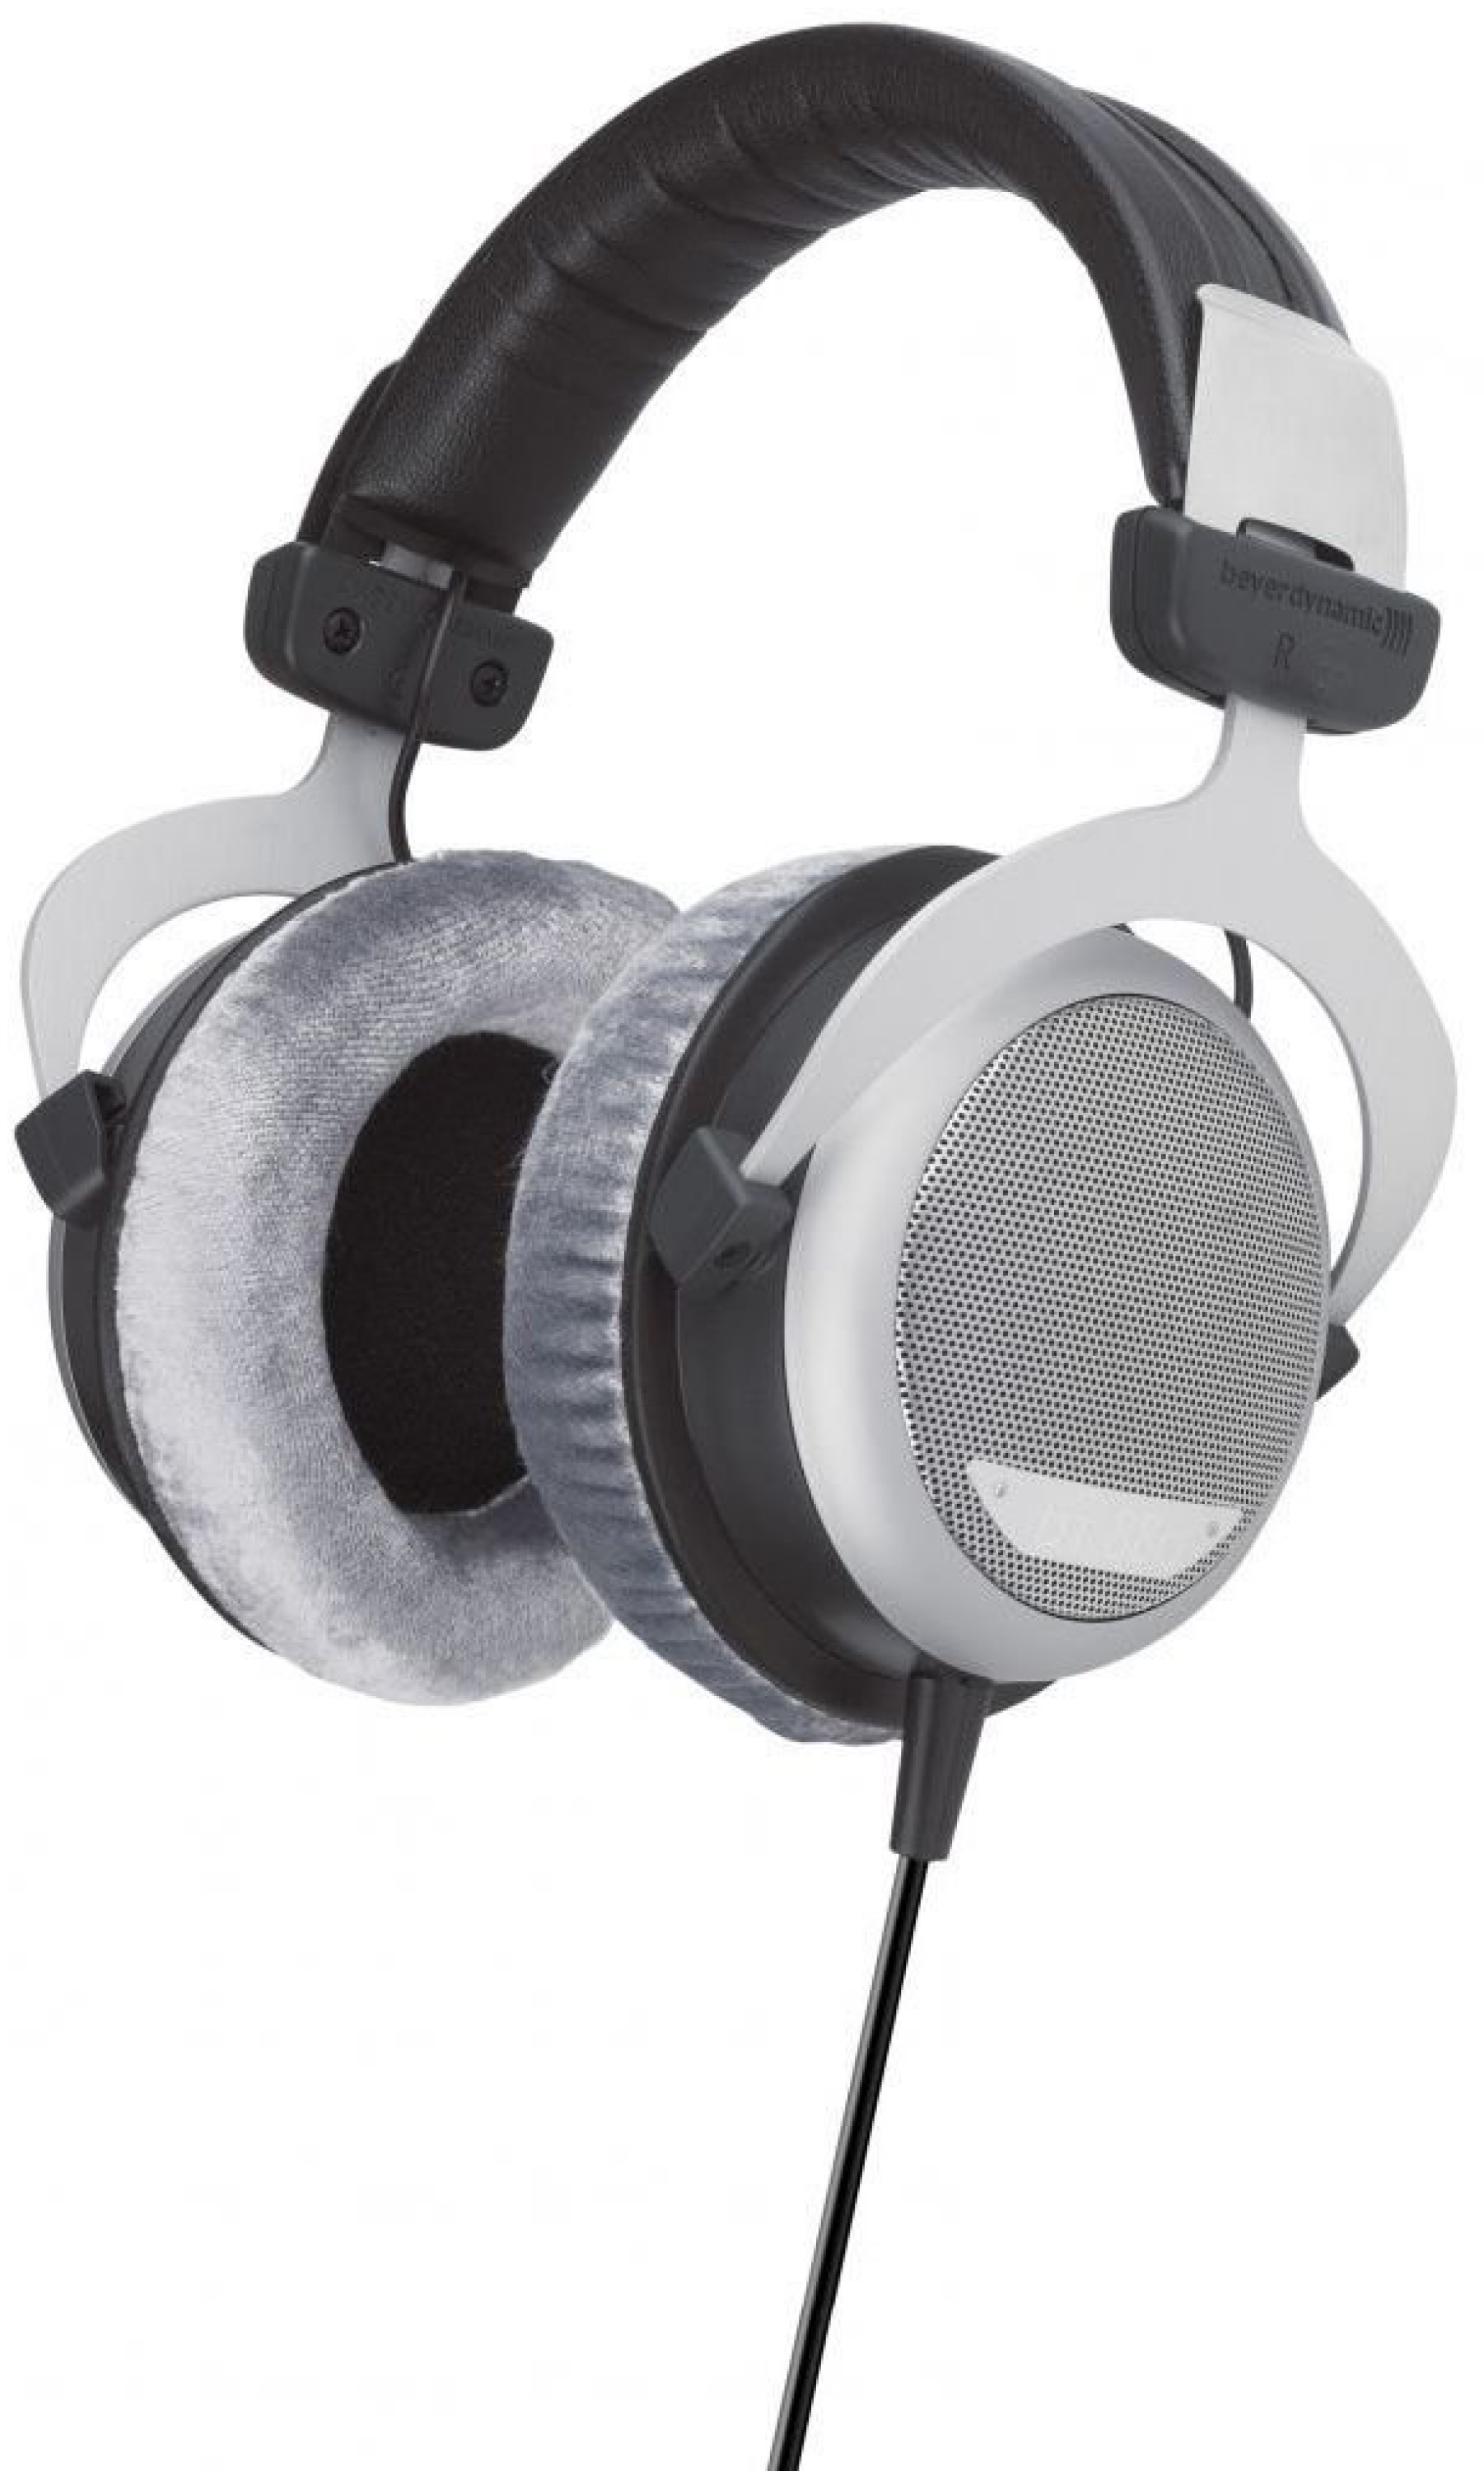 Beyerdynamic DT 880 Premium Edition 250 ohm Semi-open Studio Headphones